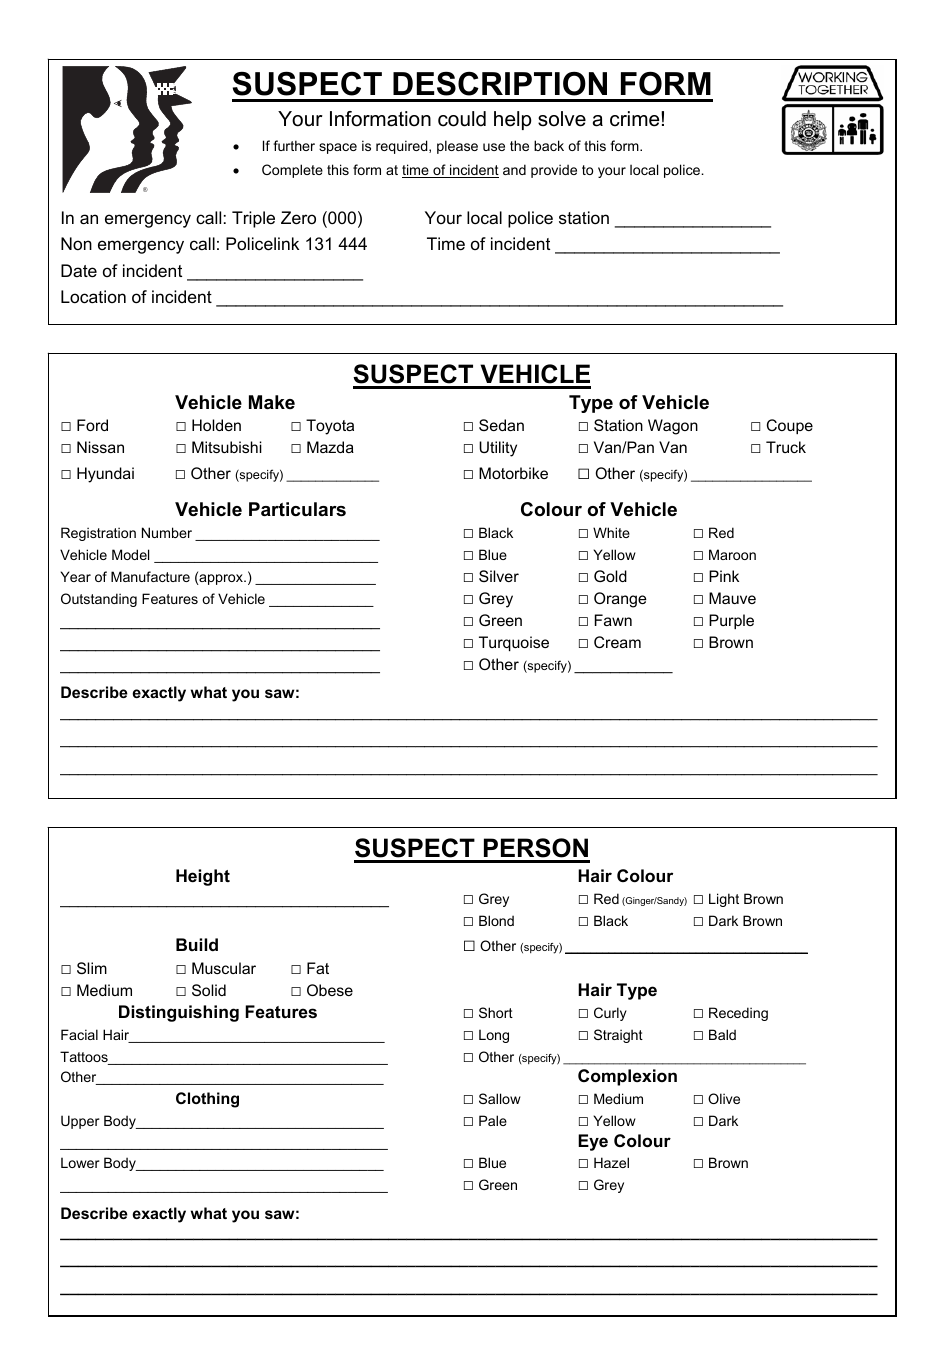 Suspect Description Form - Queensland, Australia, Page 1